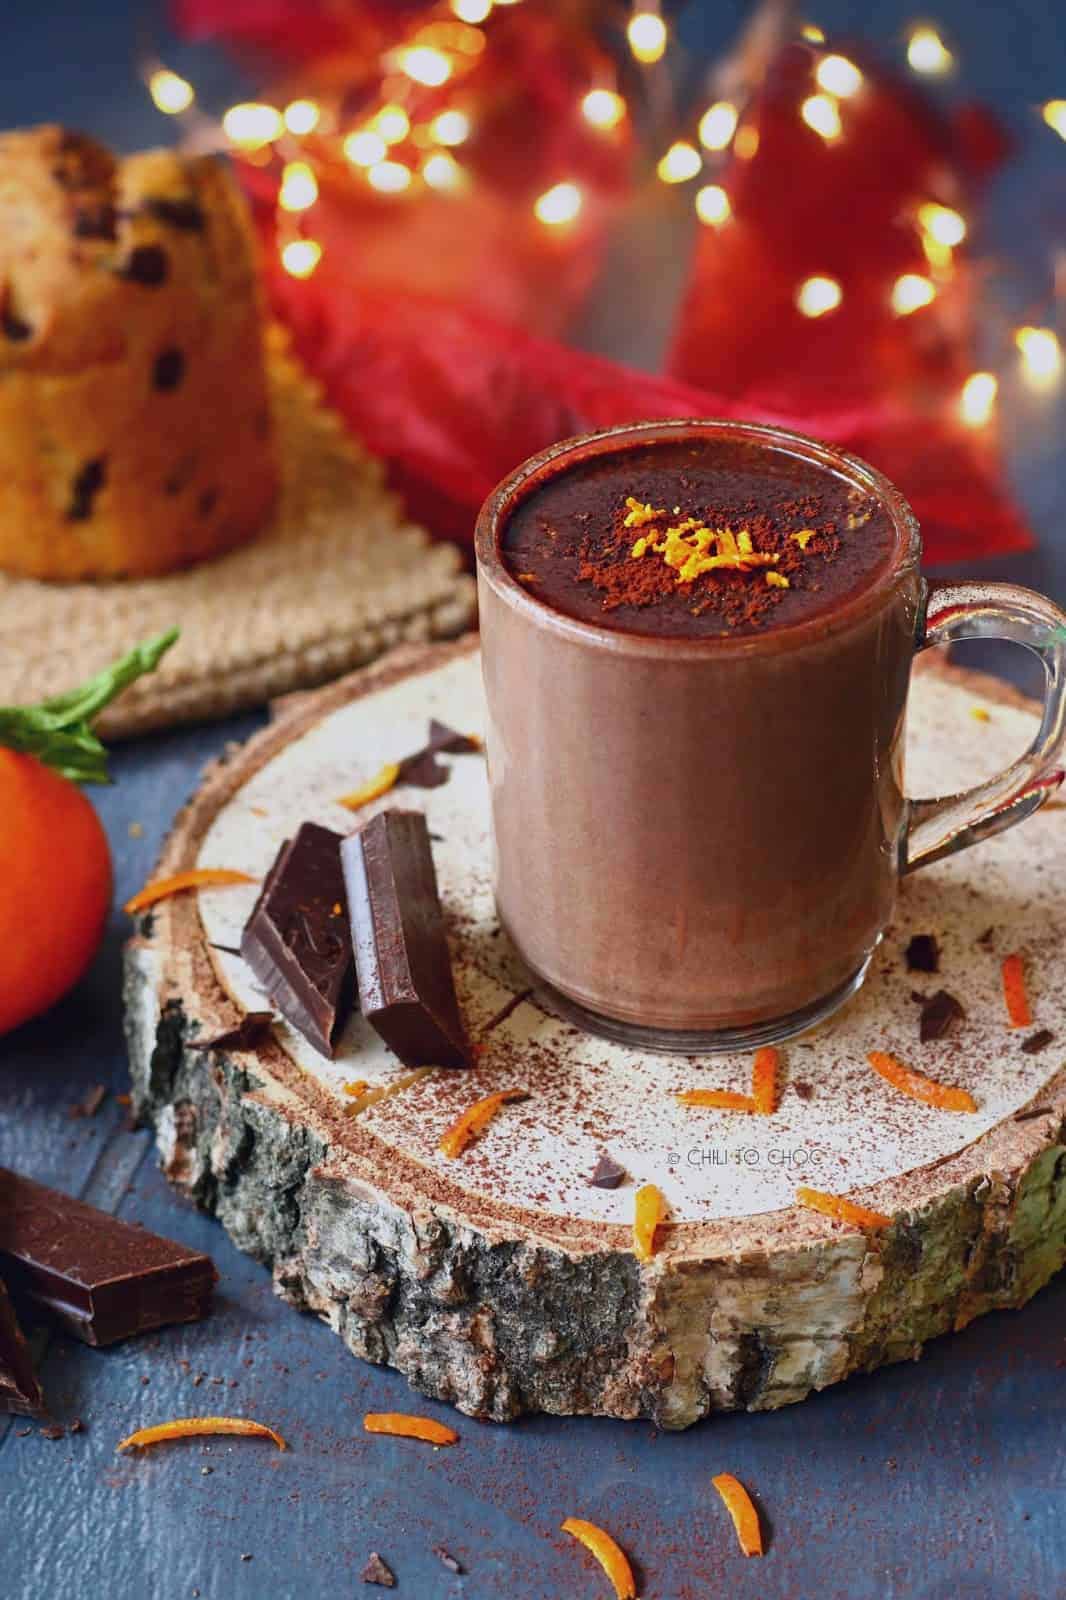 a festive chocolate drink